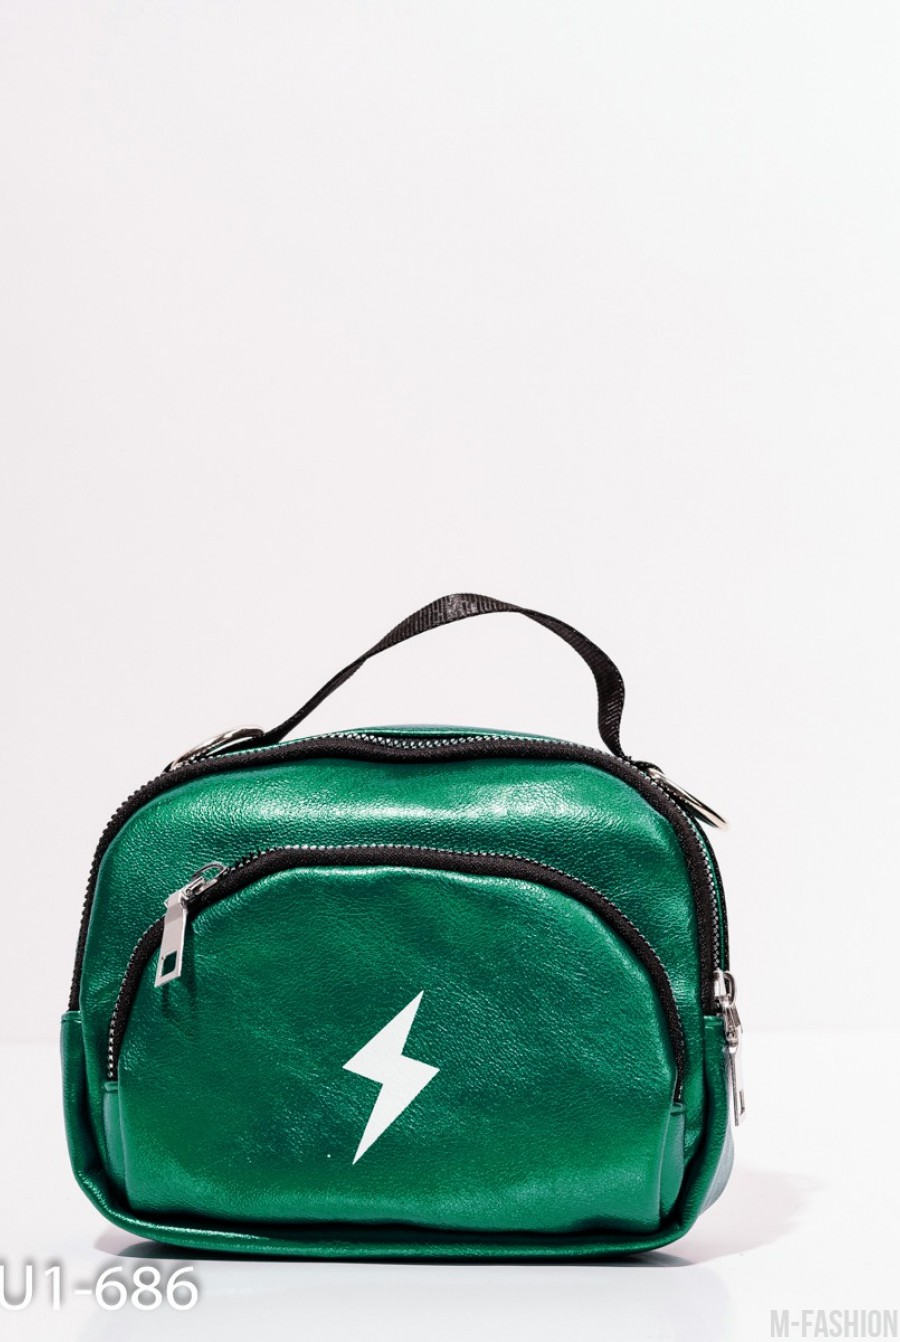 Зеленая ручная сумка-клатч из эко-кожи - Фото 1